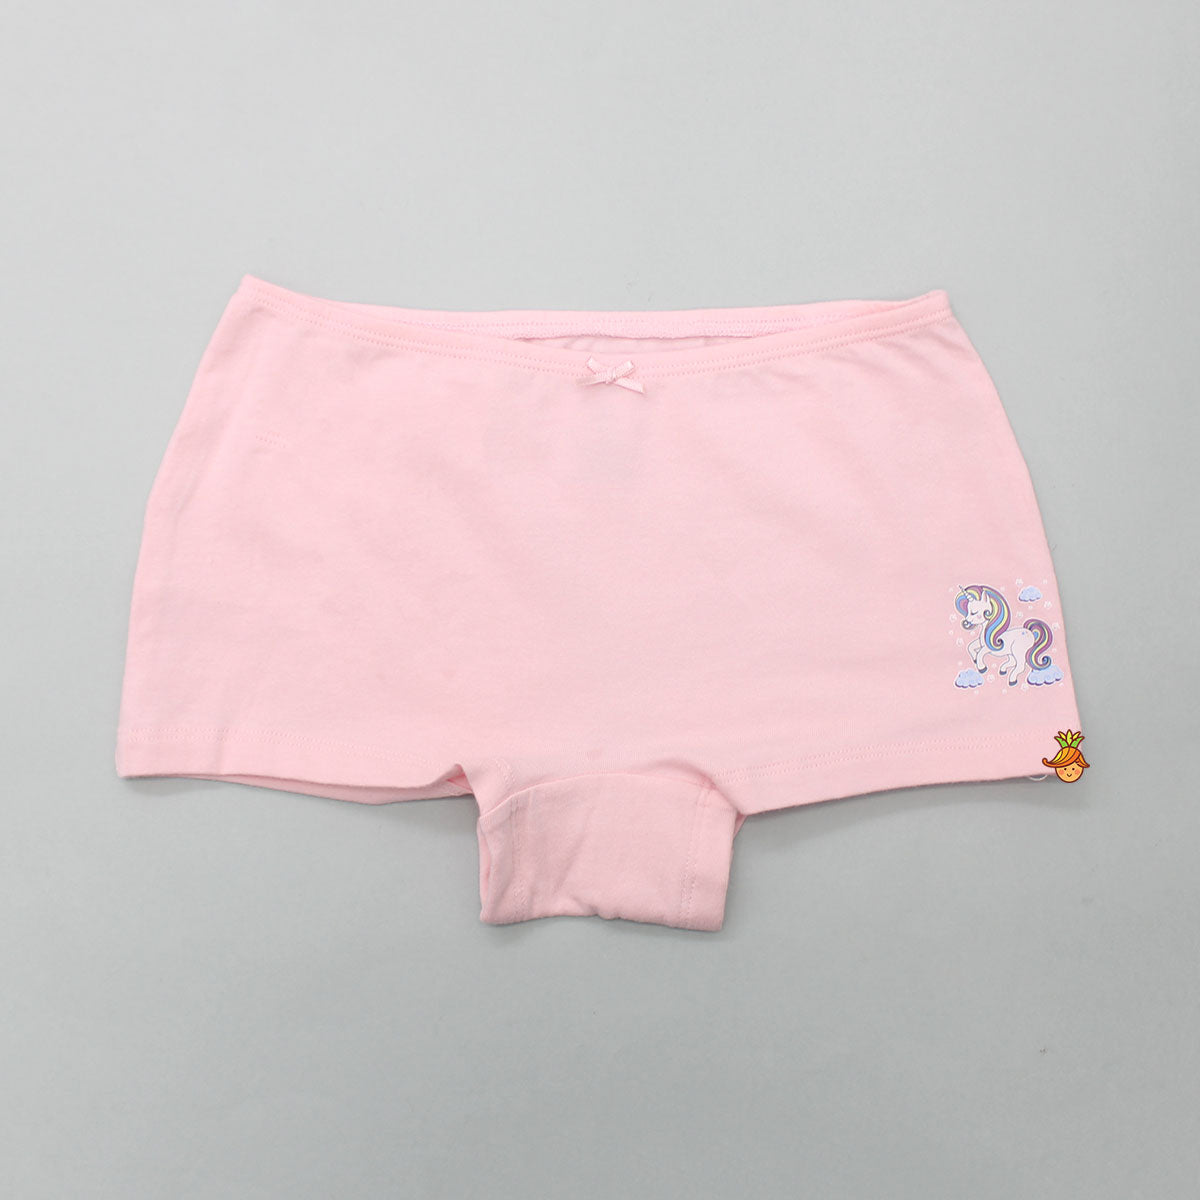 Unicorn Printed Pink And Green Boyshort Panties - Set of 2